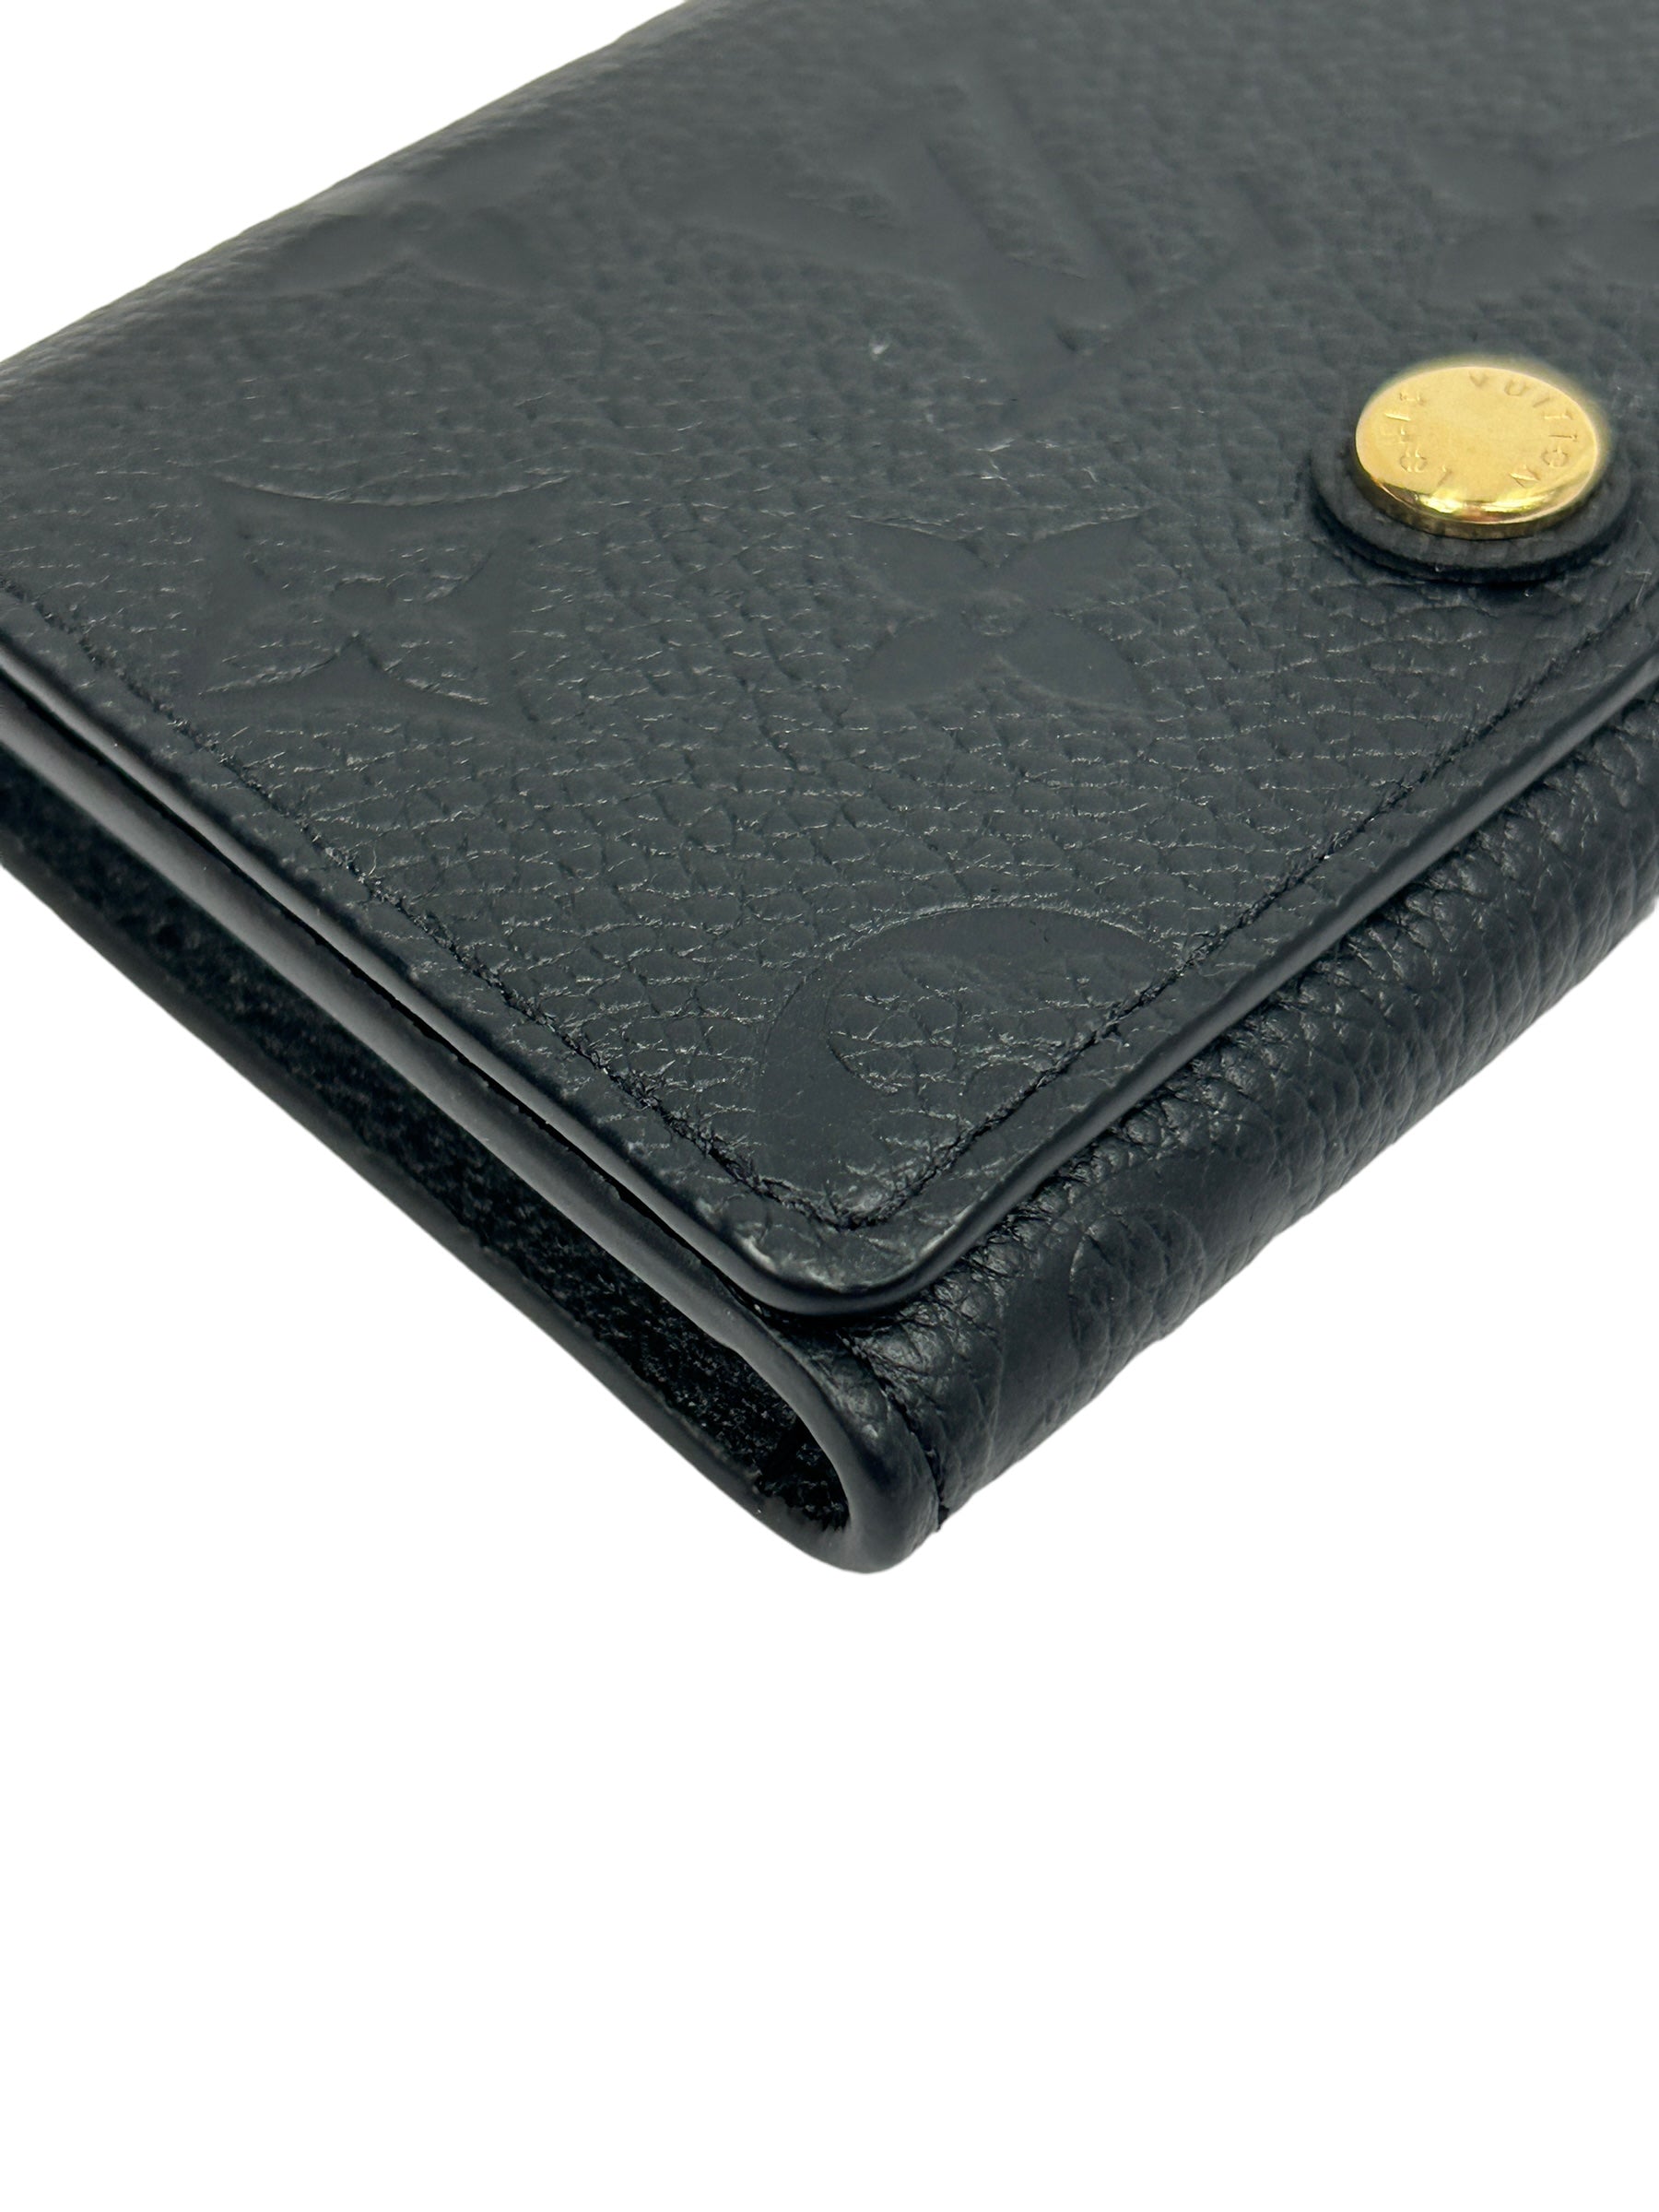 Black Empriente Cowhide Leather Mini Victorine Wallet w/ GHW